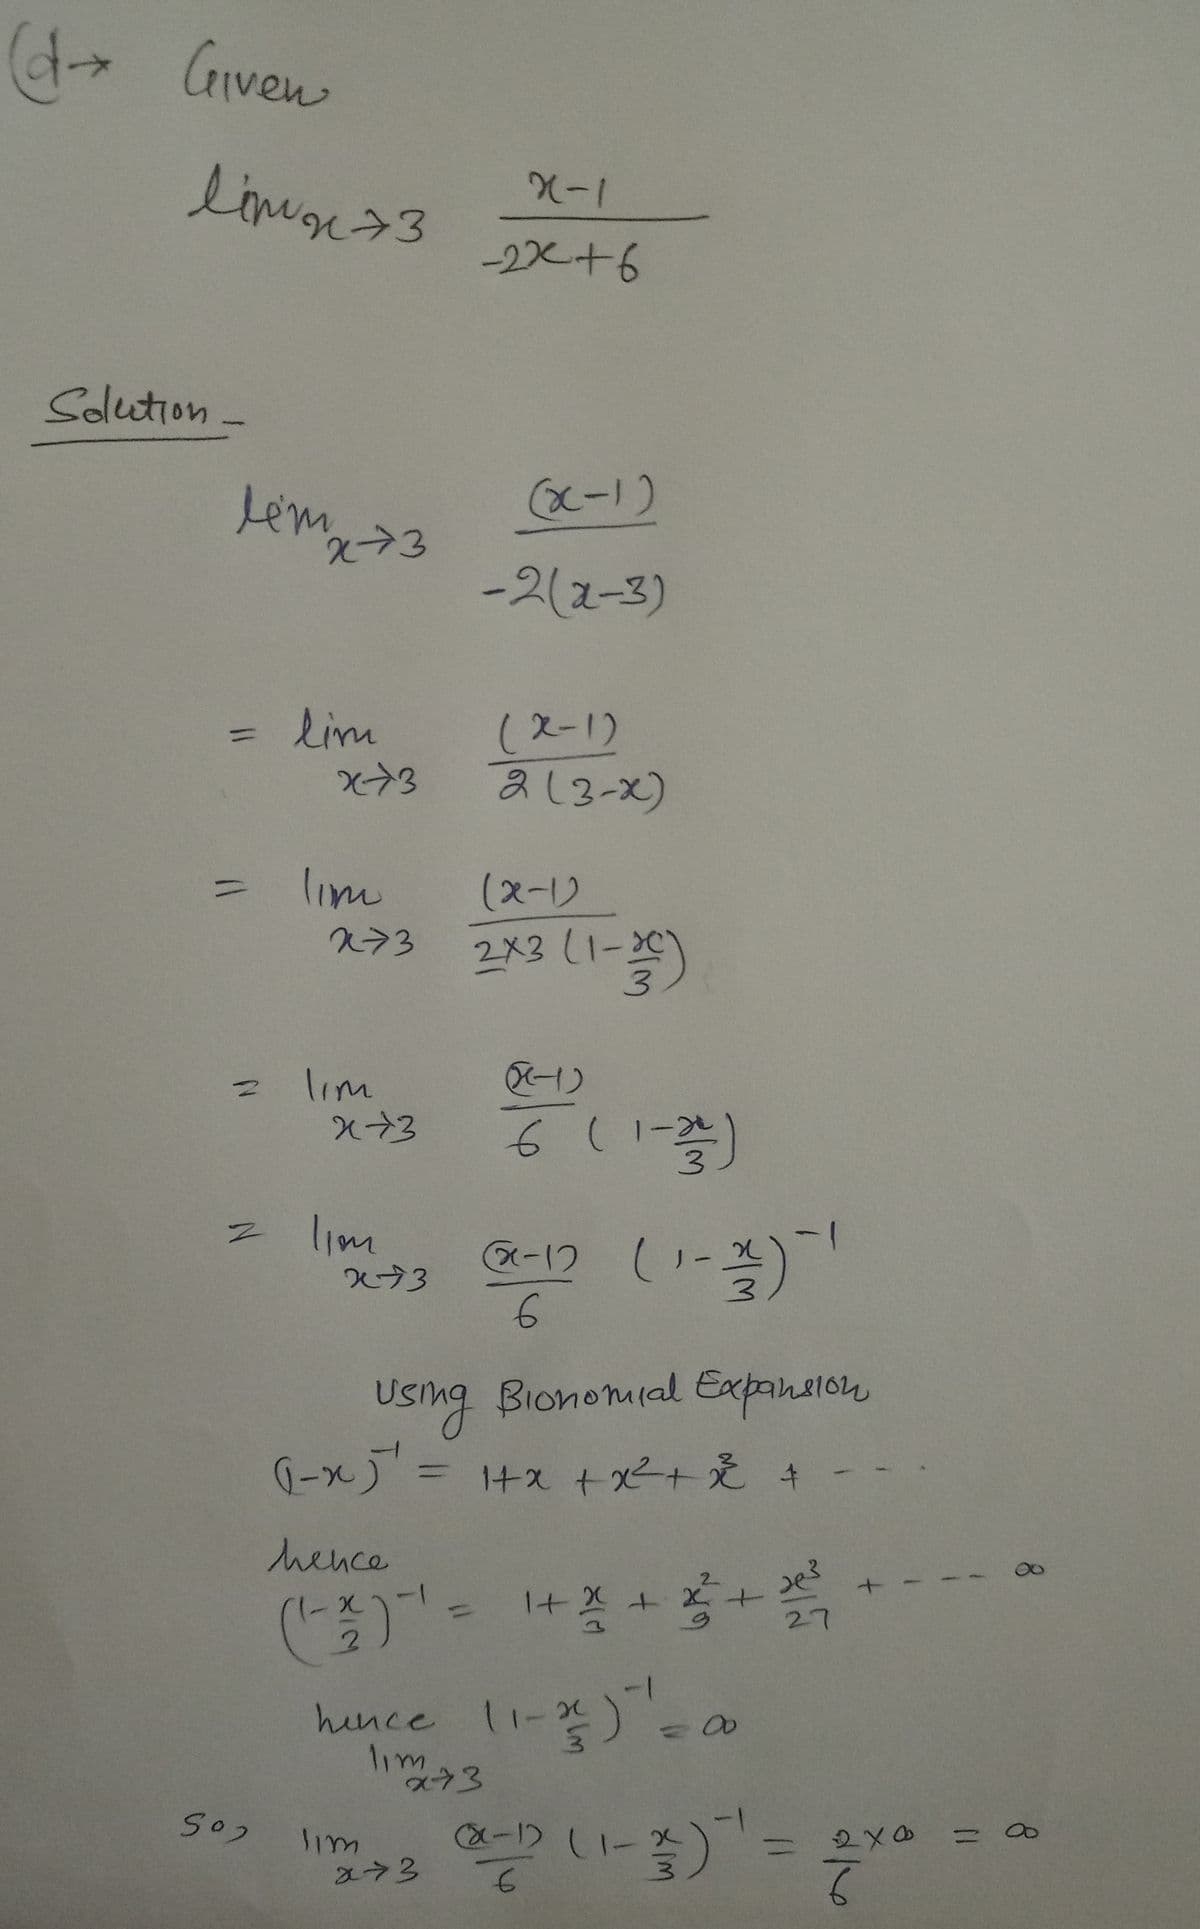 (d→ Given
linn 73
Solution
lém x-73
= lim
Z
502
x-73
lim
273
lim
x+3
lim
x43
X-1
-2x+6
(x-1)
-2(x-3)
(x-1)
2 (3-X)
(x-1)
2x3 (1-3)
lim
x73
((-1)
6 ( 1 - 2/1/²-)
(x-12 (1-1)-1
3
6
Using Bionomial Expansion
(-x) = 1+ x + x² + x² +
hence
(1-22)-¹ = ¹+ 2² +2²² +2²
27
hence 11-x) = ¹ = a
lim
x-73
محمد
-1
-1 (1-3) -¹ =
6
+
2x0
6
=
8